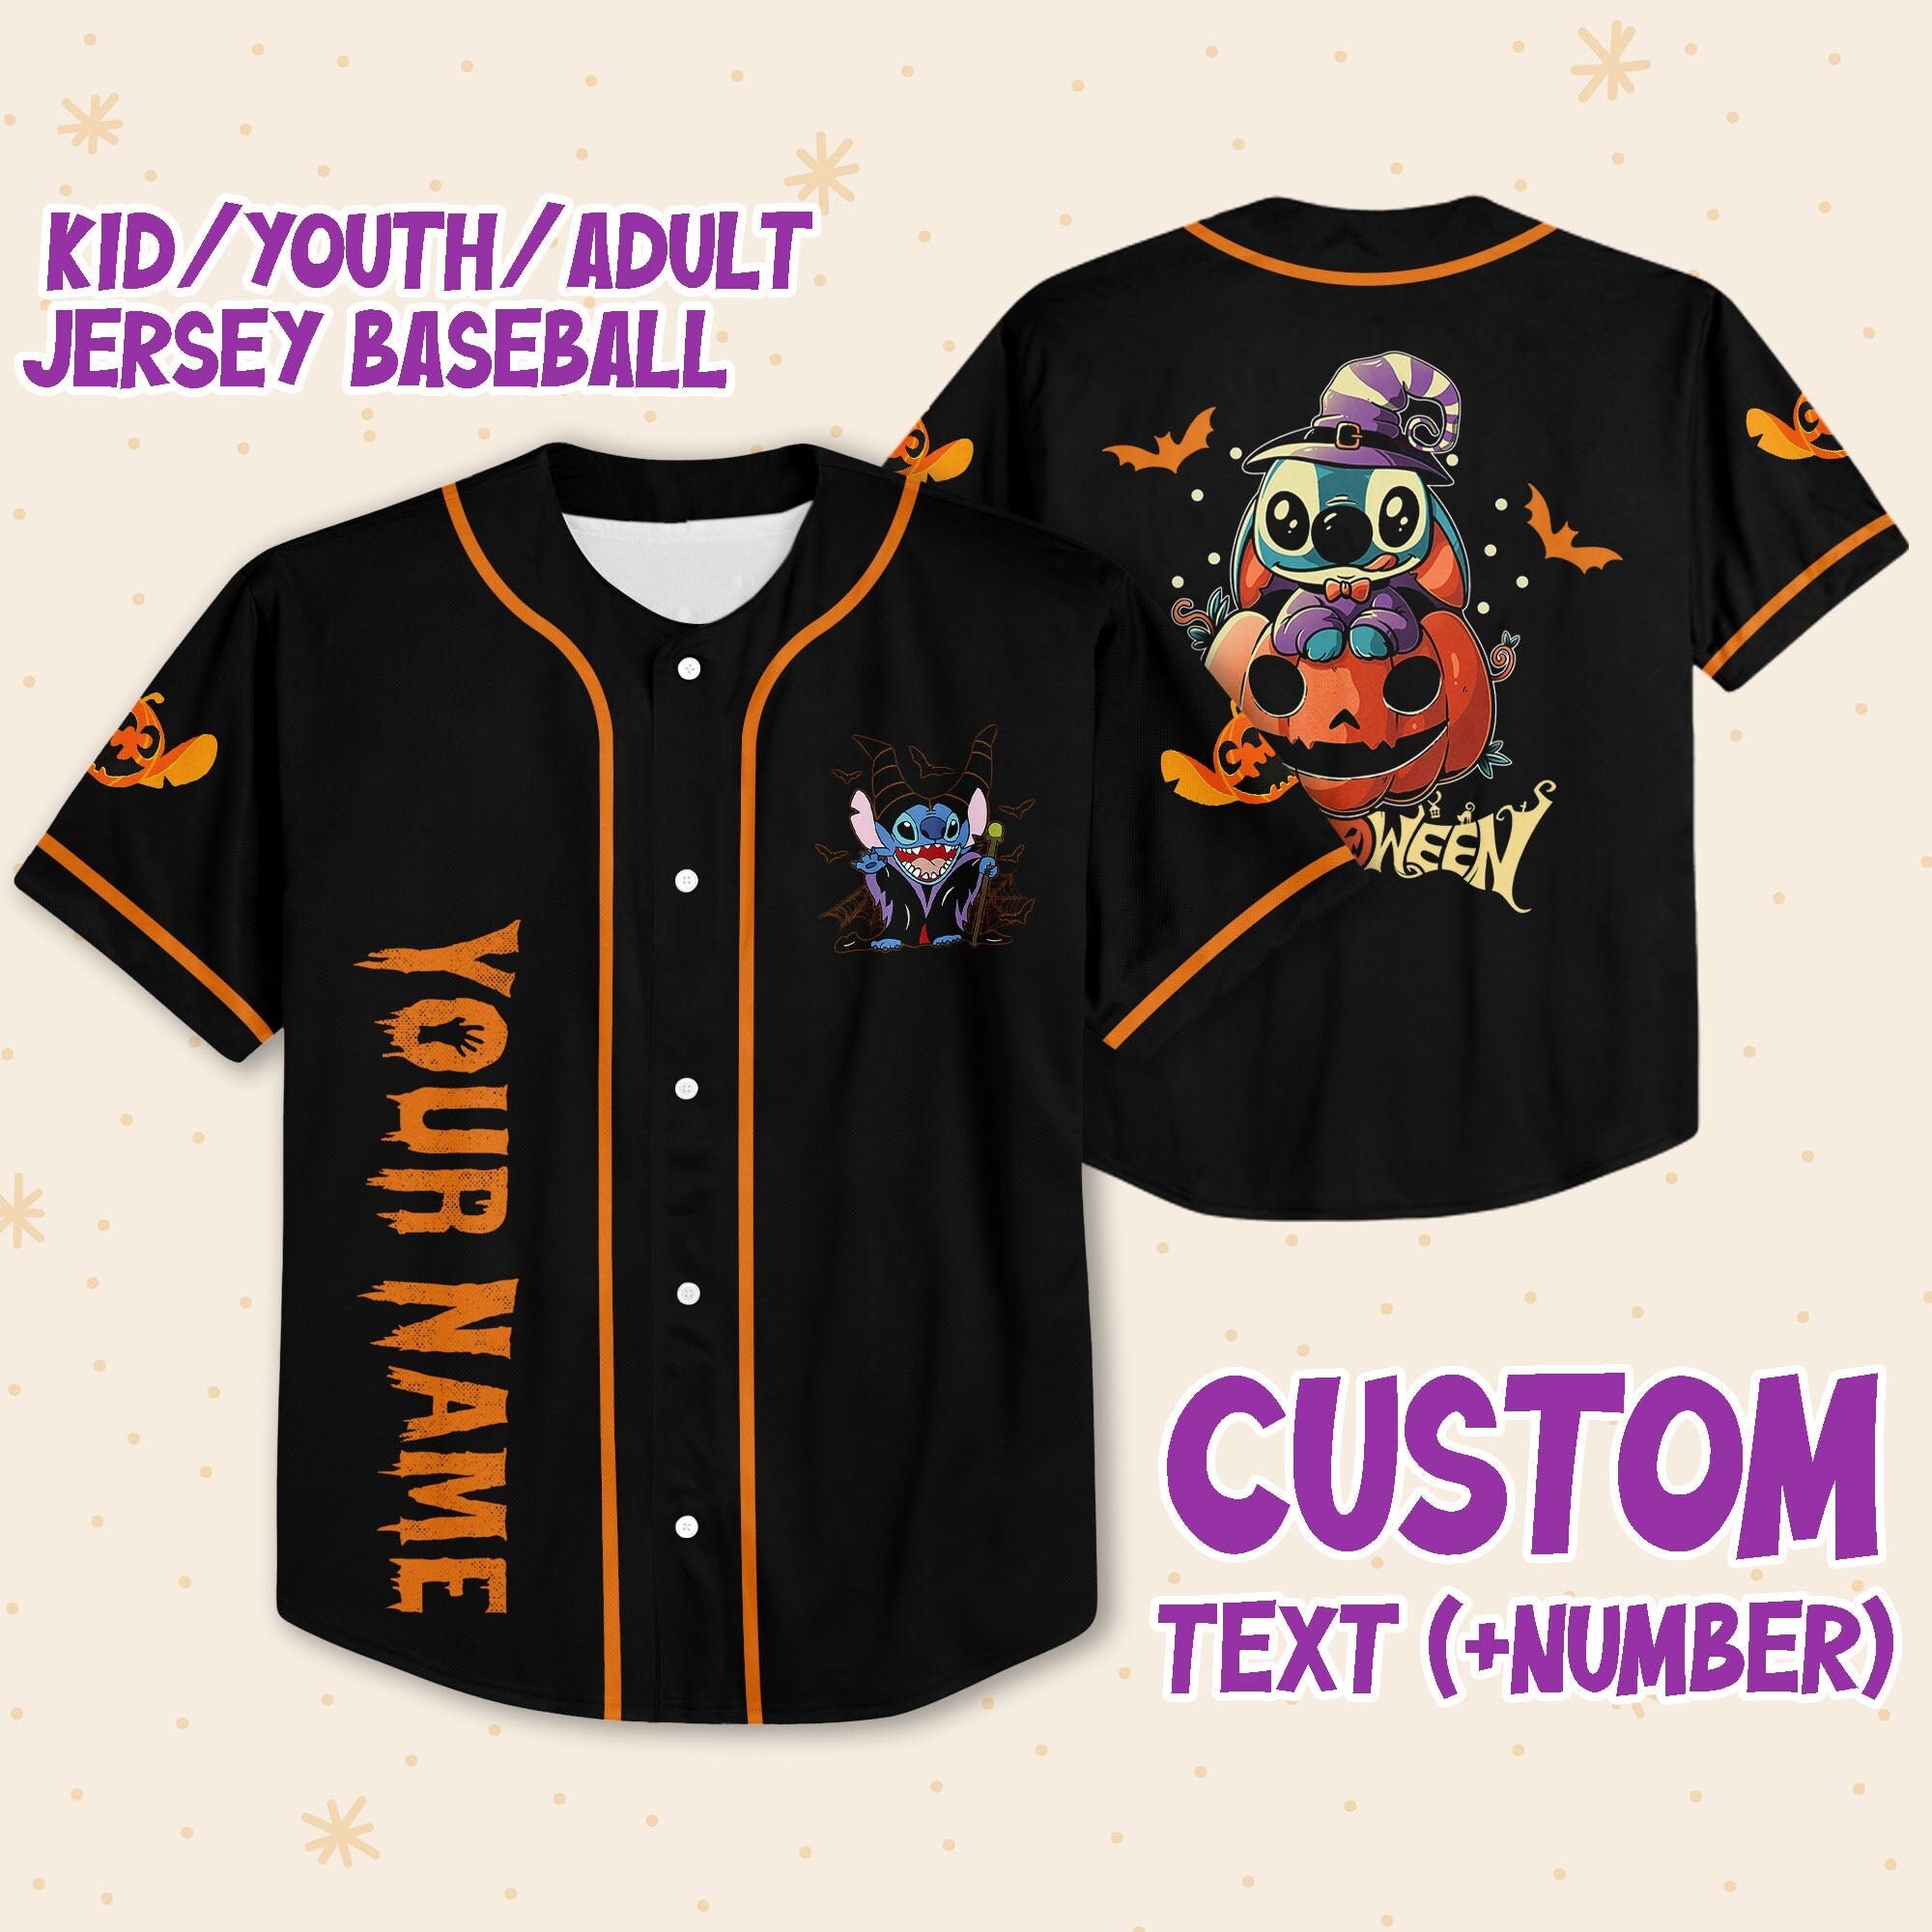 Cutter Baseball Uniform - Adult &Youth